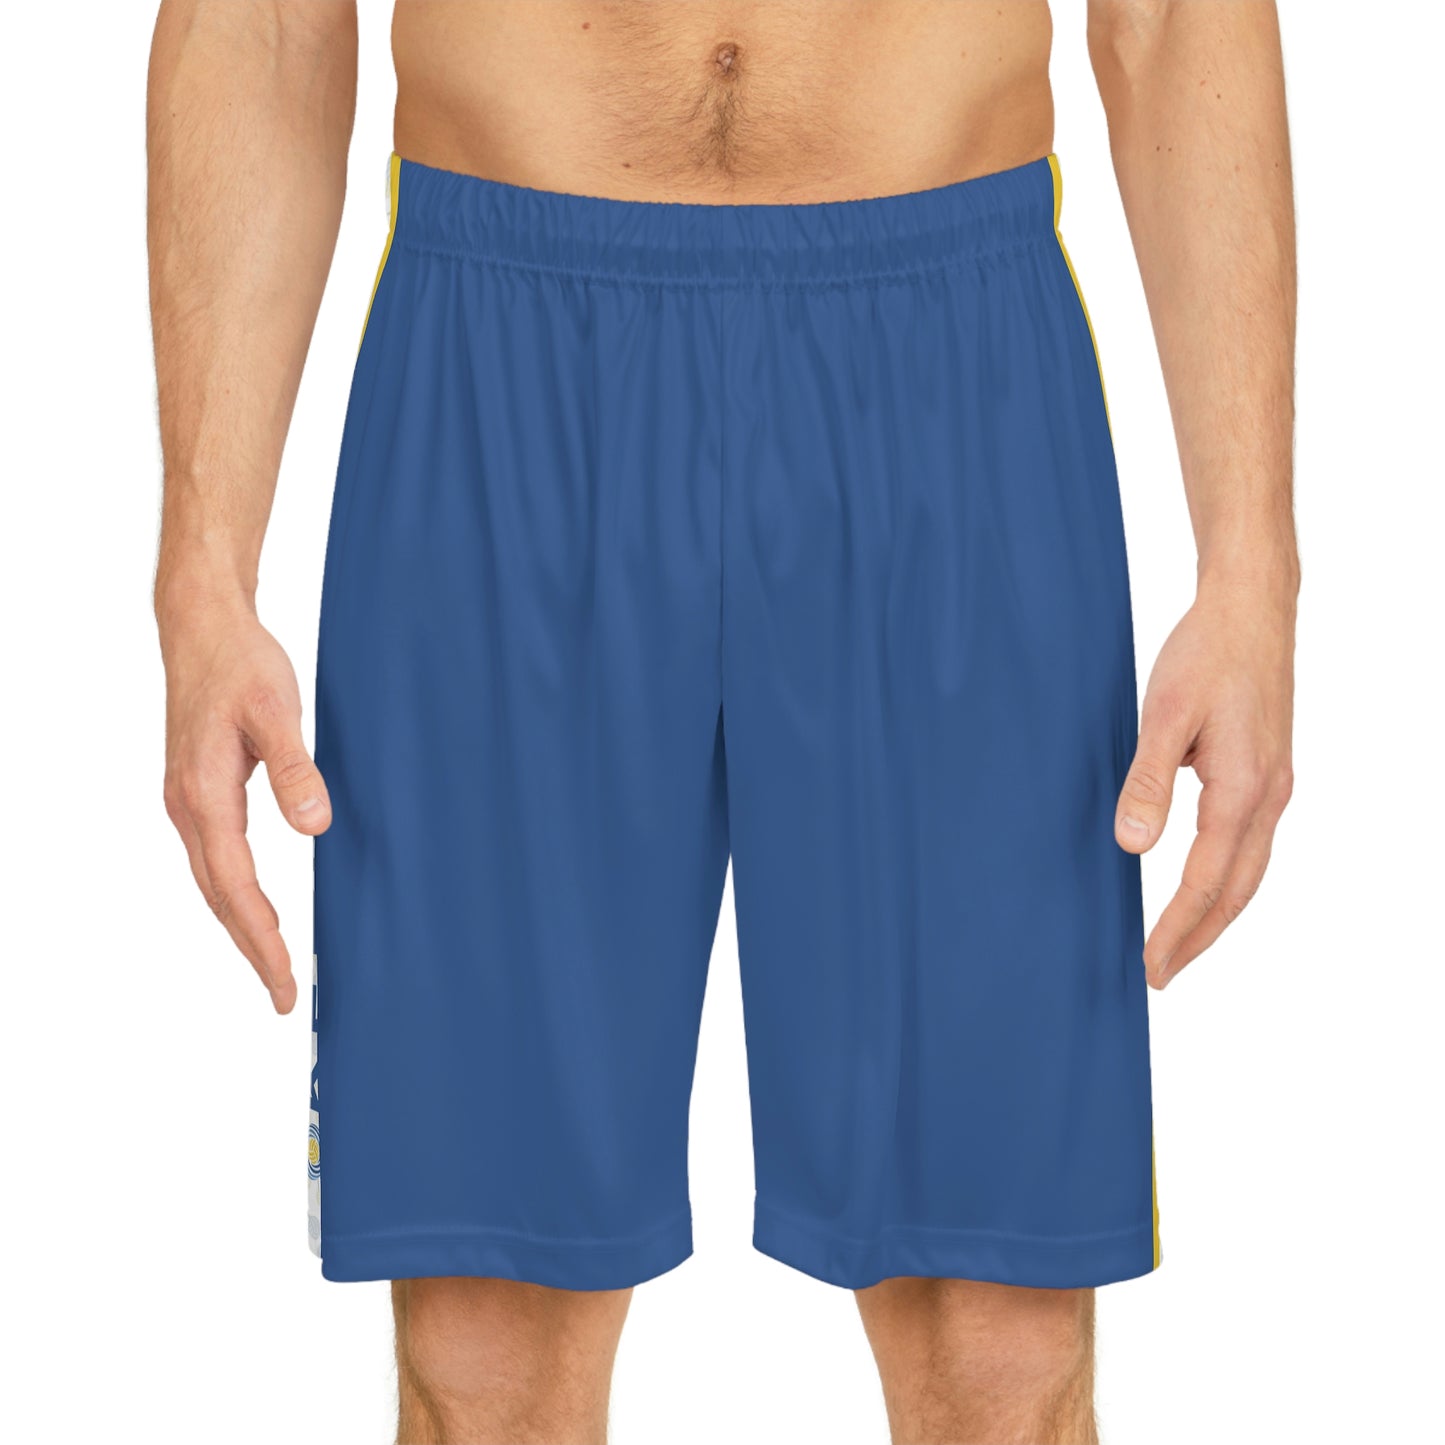 Kern Premier - Blue and Gold - Basketball Shorts